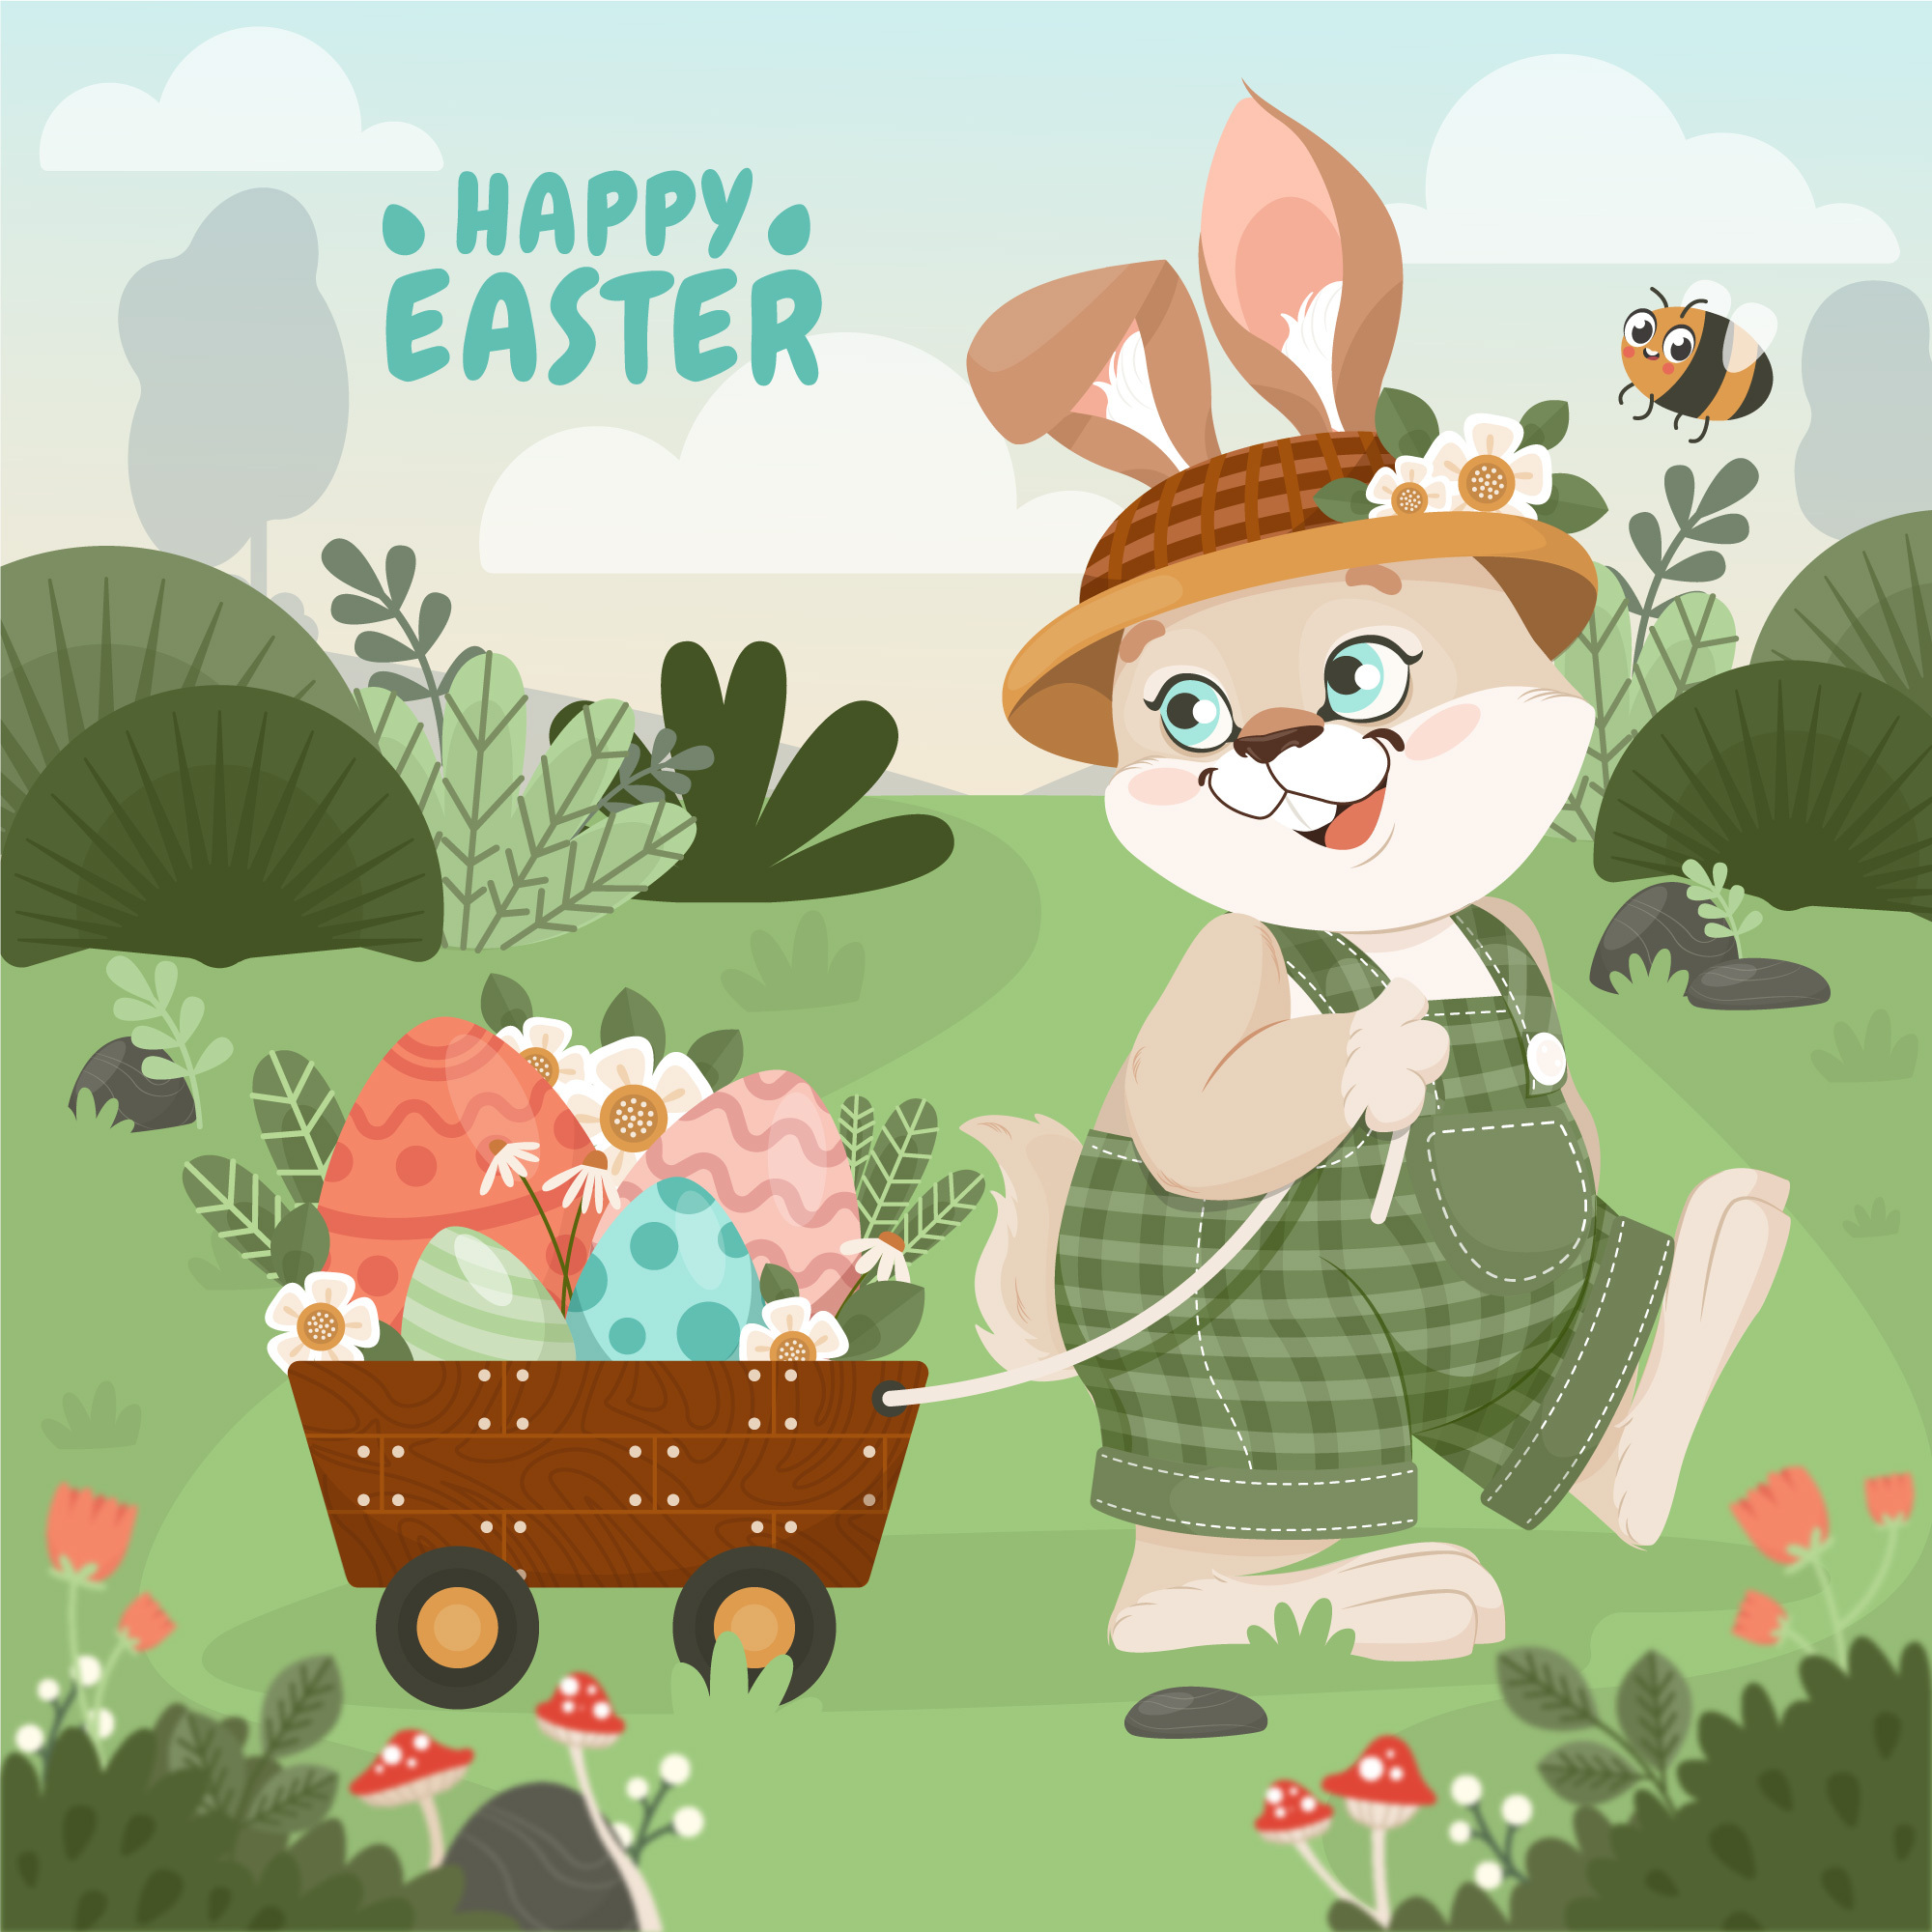 Happy Easter - Original image